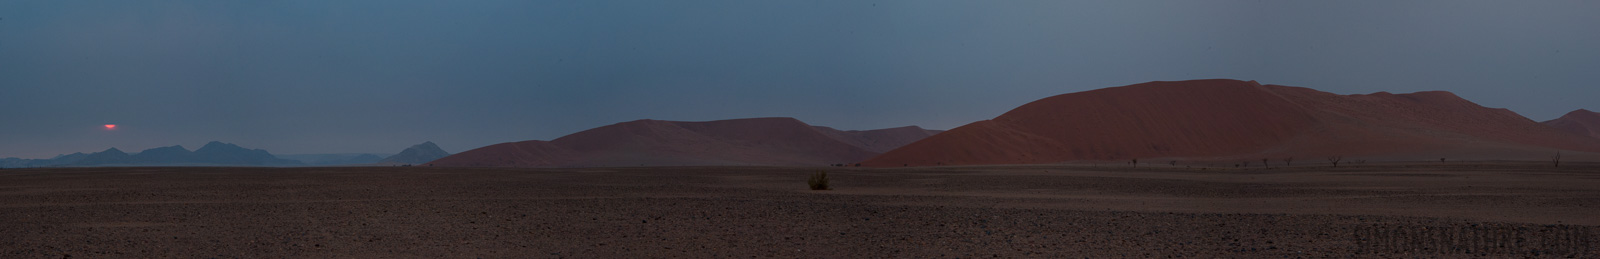 Namib-Naukluft National Park [100 mm, 1/80 Sek. bei f / 11, ISO 1250]